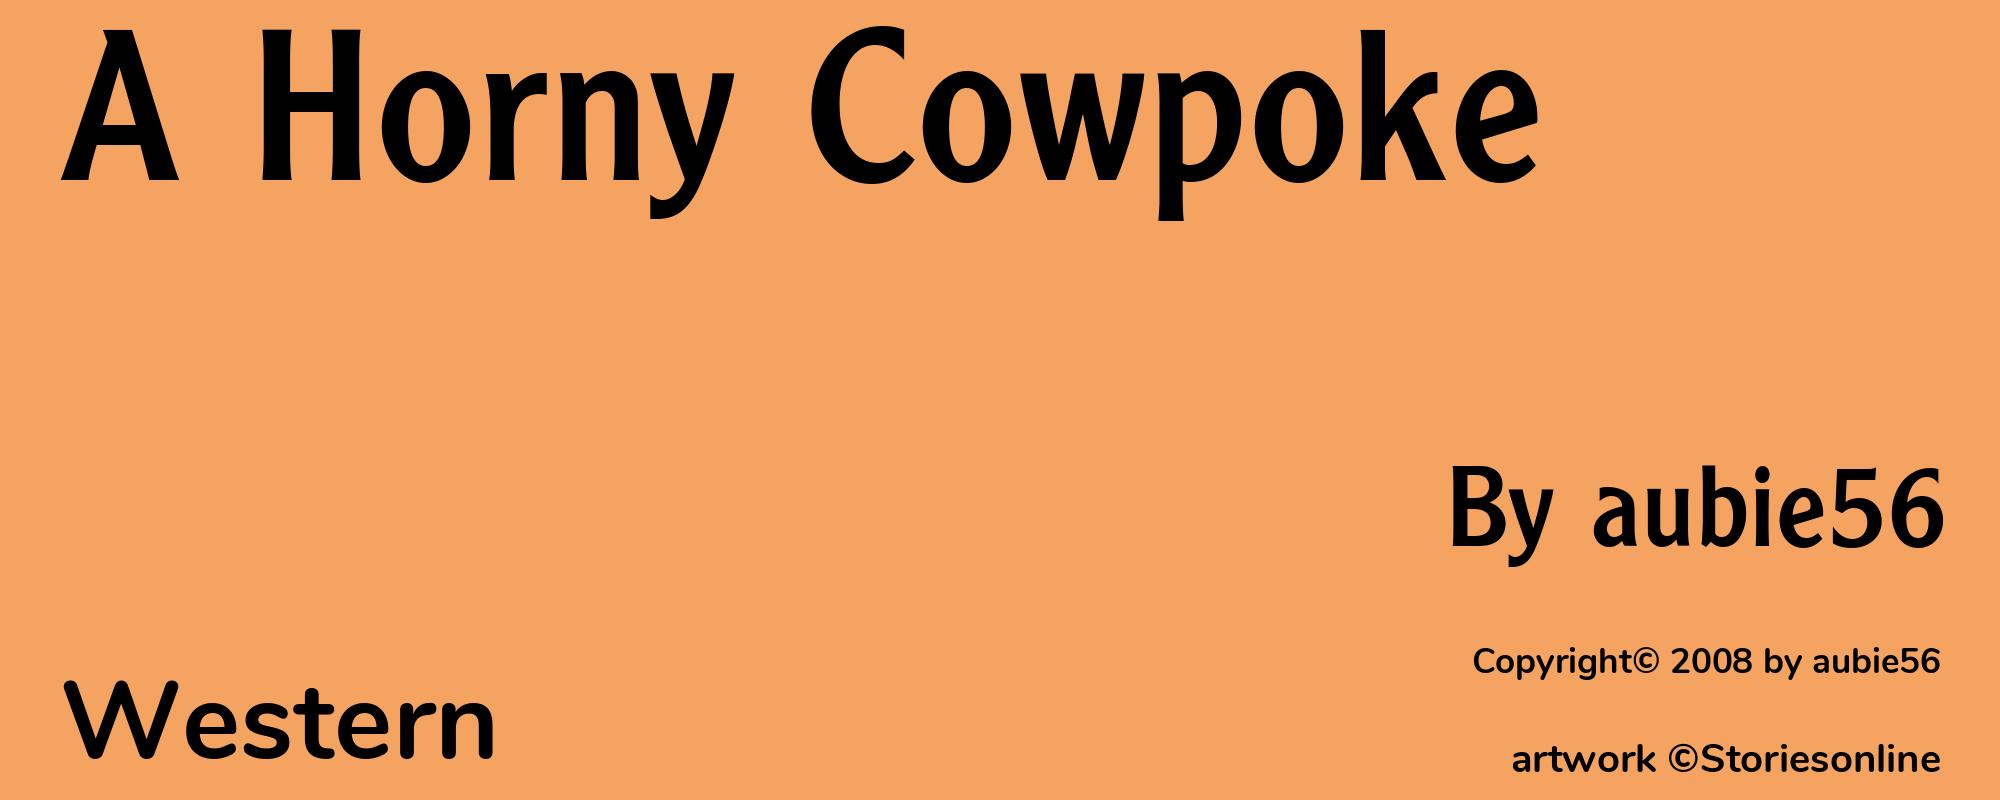 A Horny Cowpoke - Cover